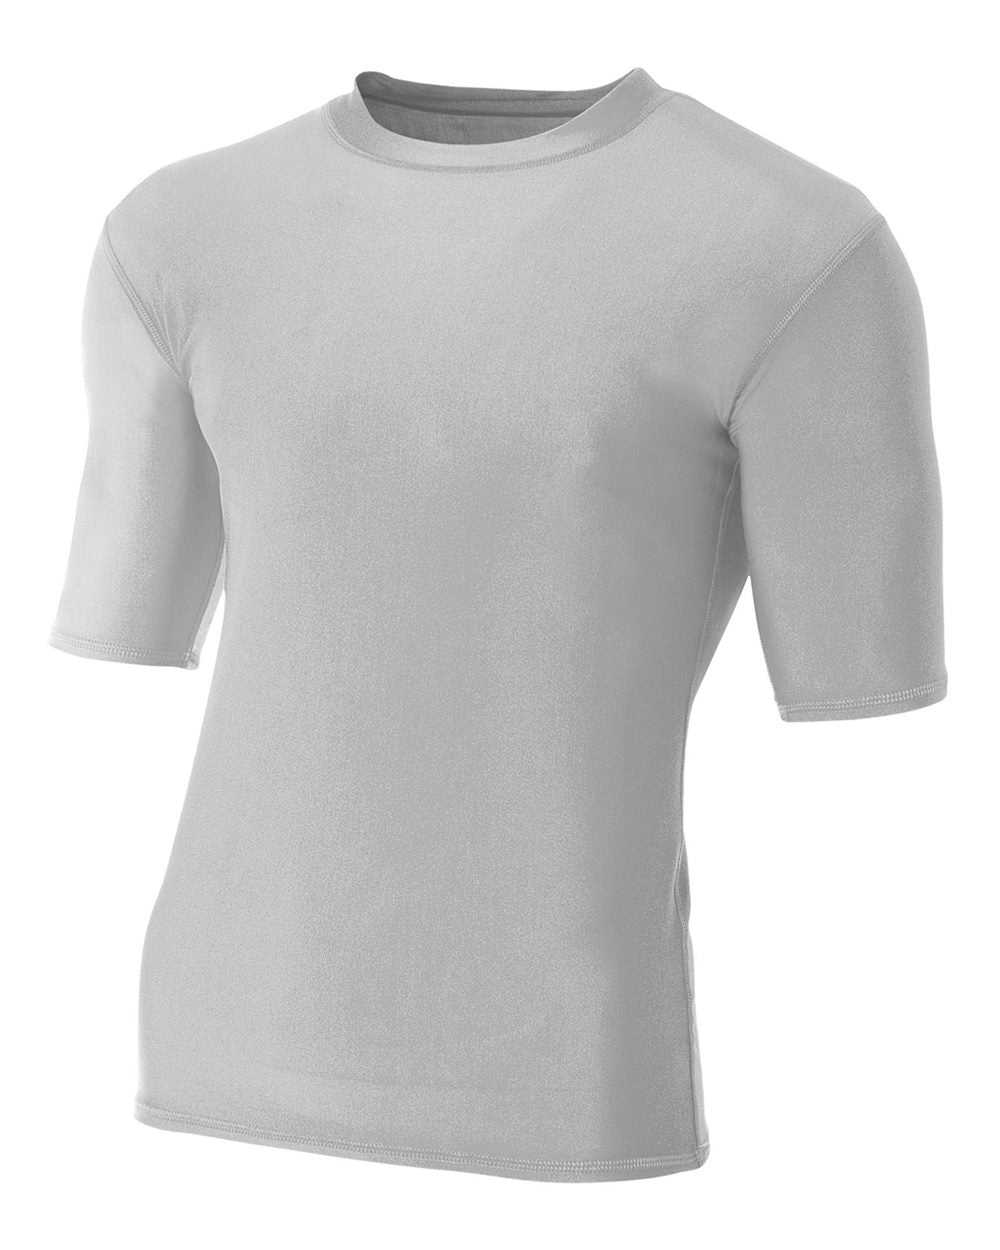 1/2 sleeve compression shirt